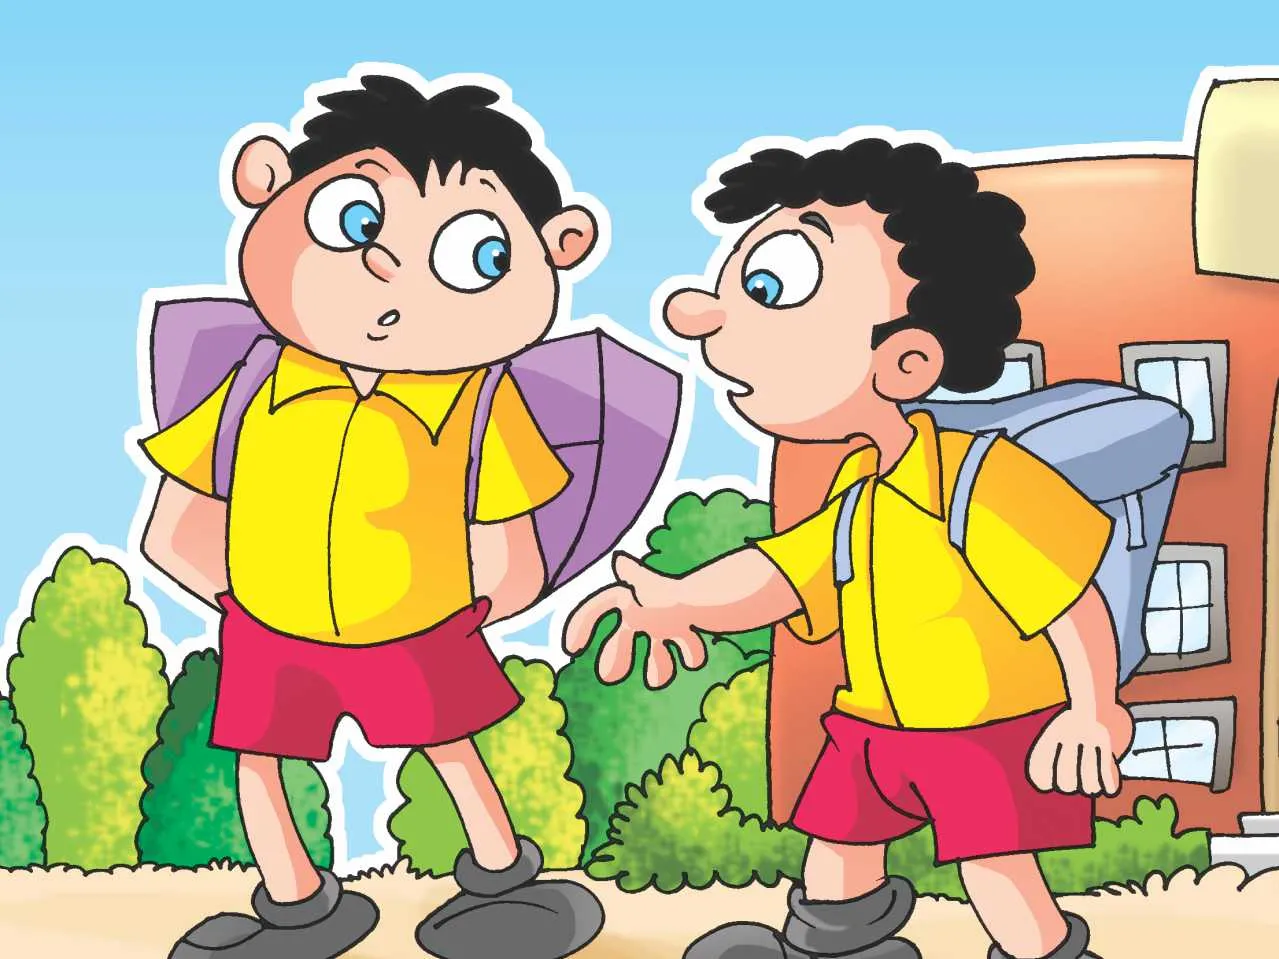 Two School Boys cartoon image